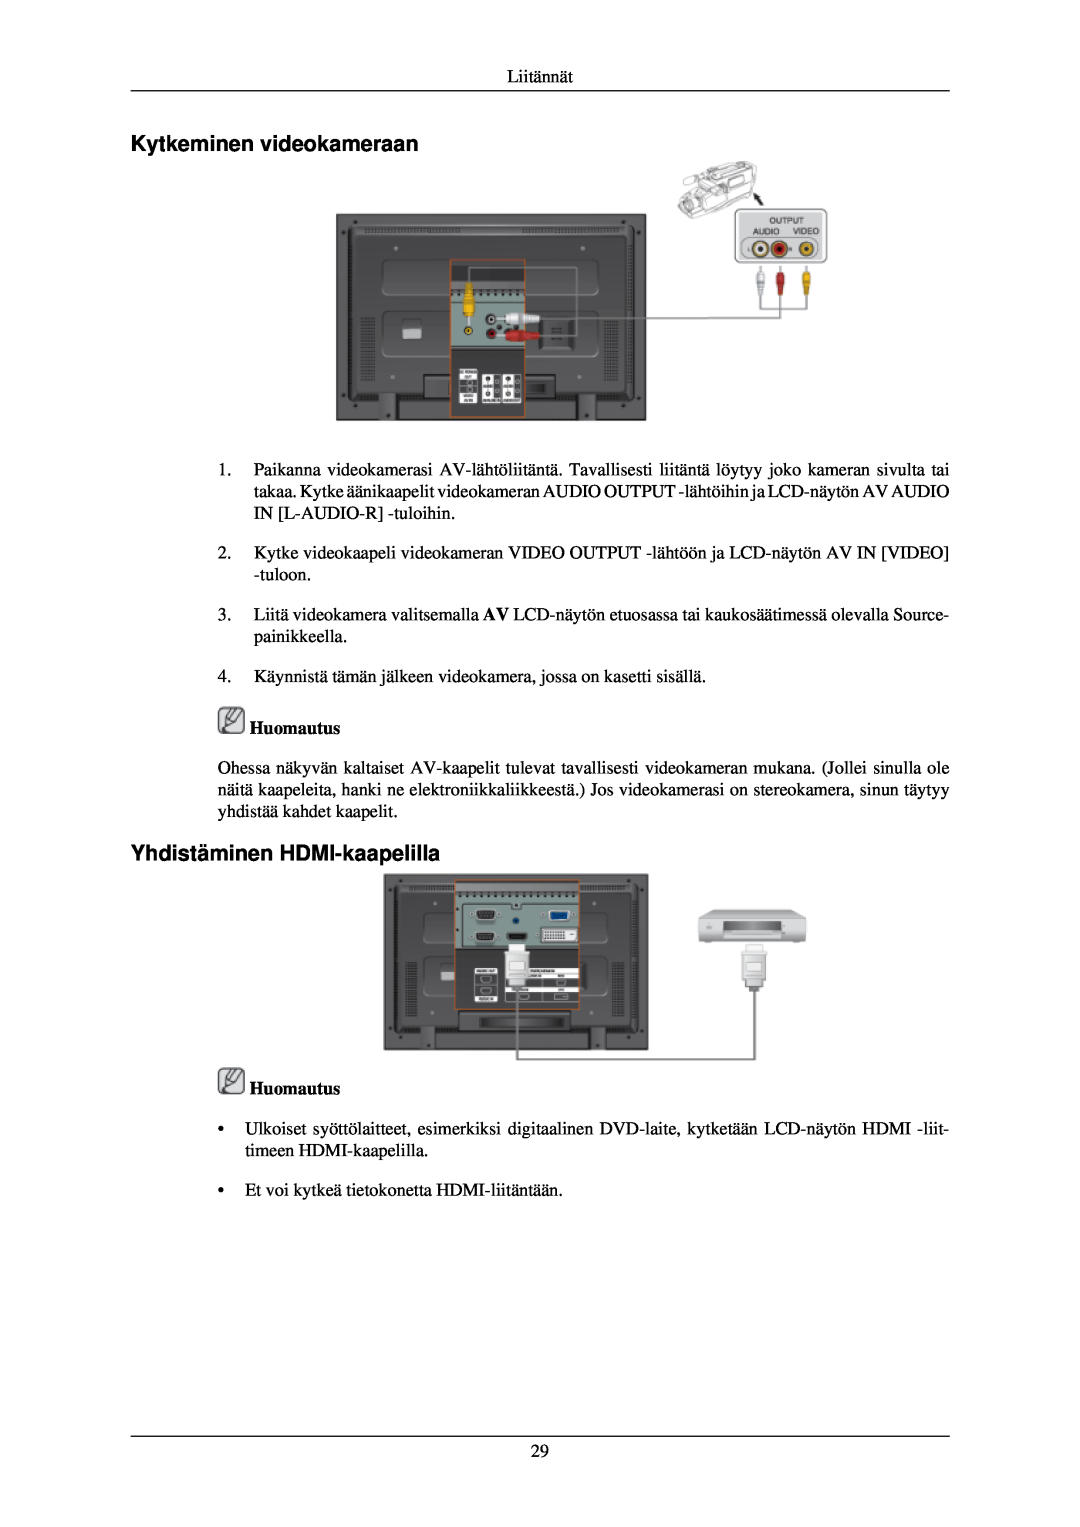 Samsung LH40TCUMBG/EN, LH46TCUMBC/EN, LH40TCQMBG/EN manual Kytkeminen videokameraan, Yhdistäminen HDMI-kaapelilla, Huomautus 